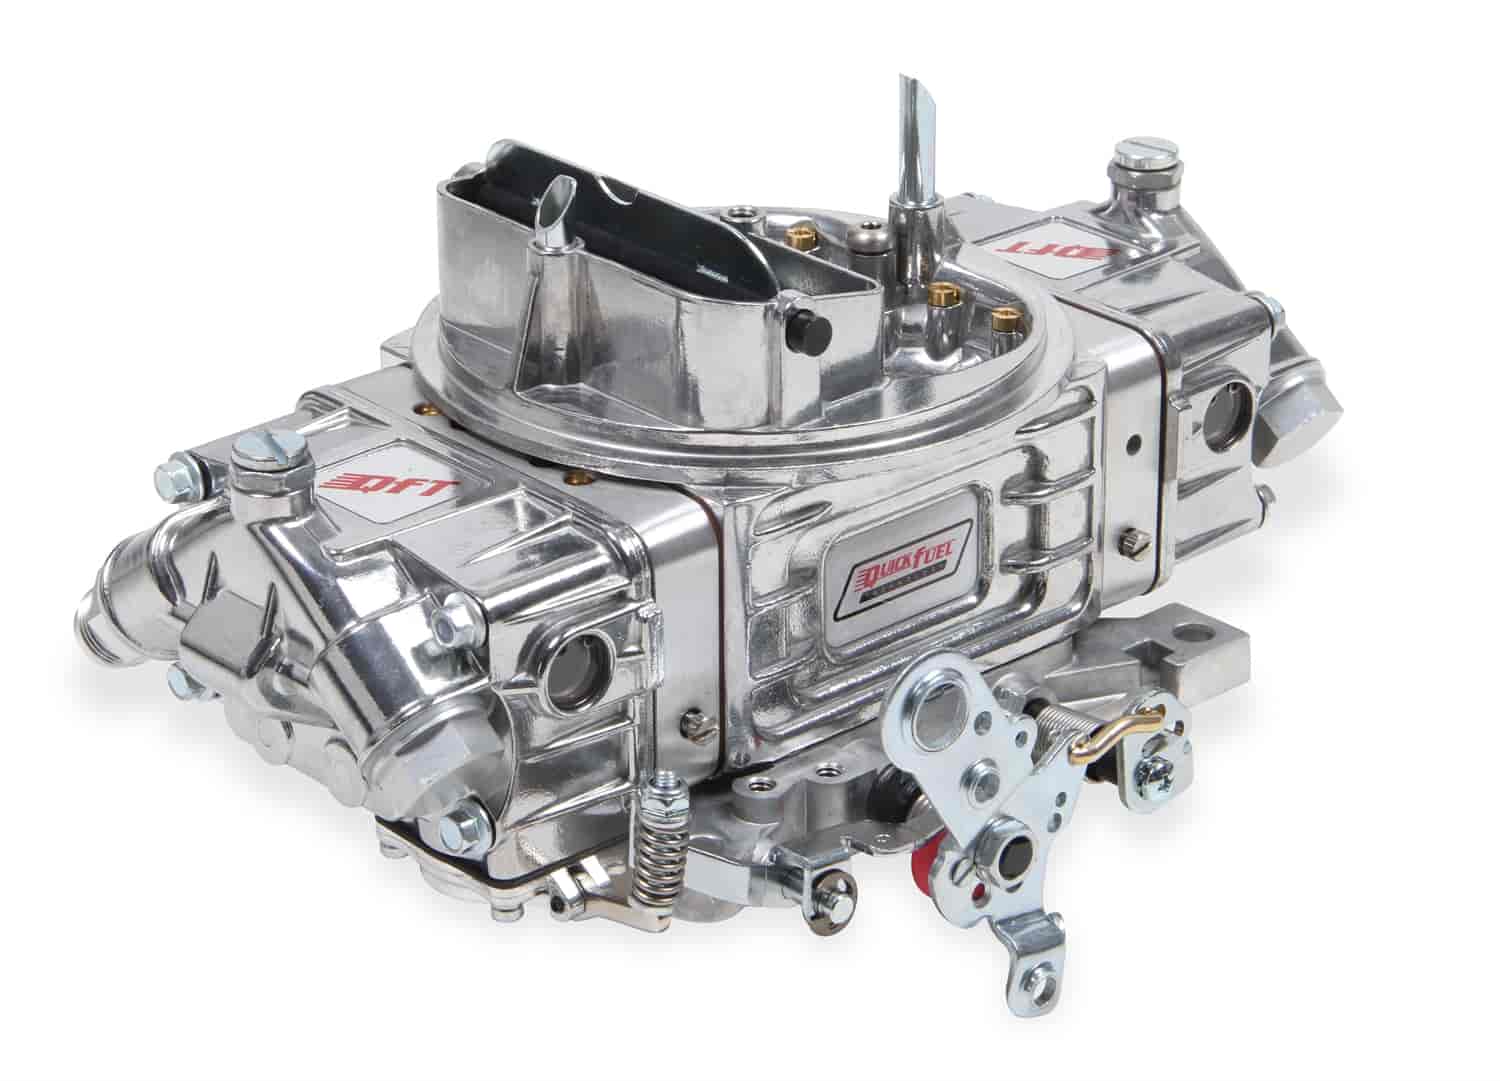 850 CFM 4-bbl SSR Carburetor For Auto w/Footbrake at Sea-Level Mechanical Secondary